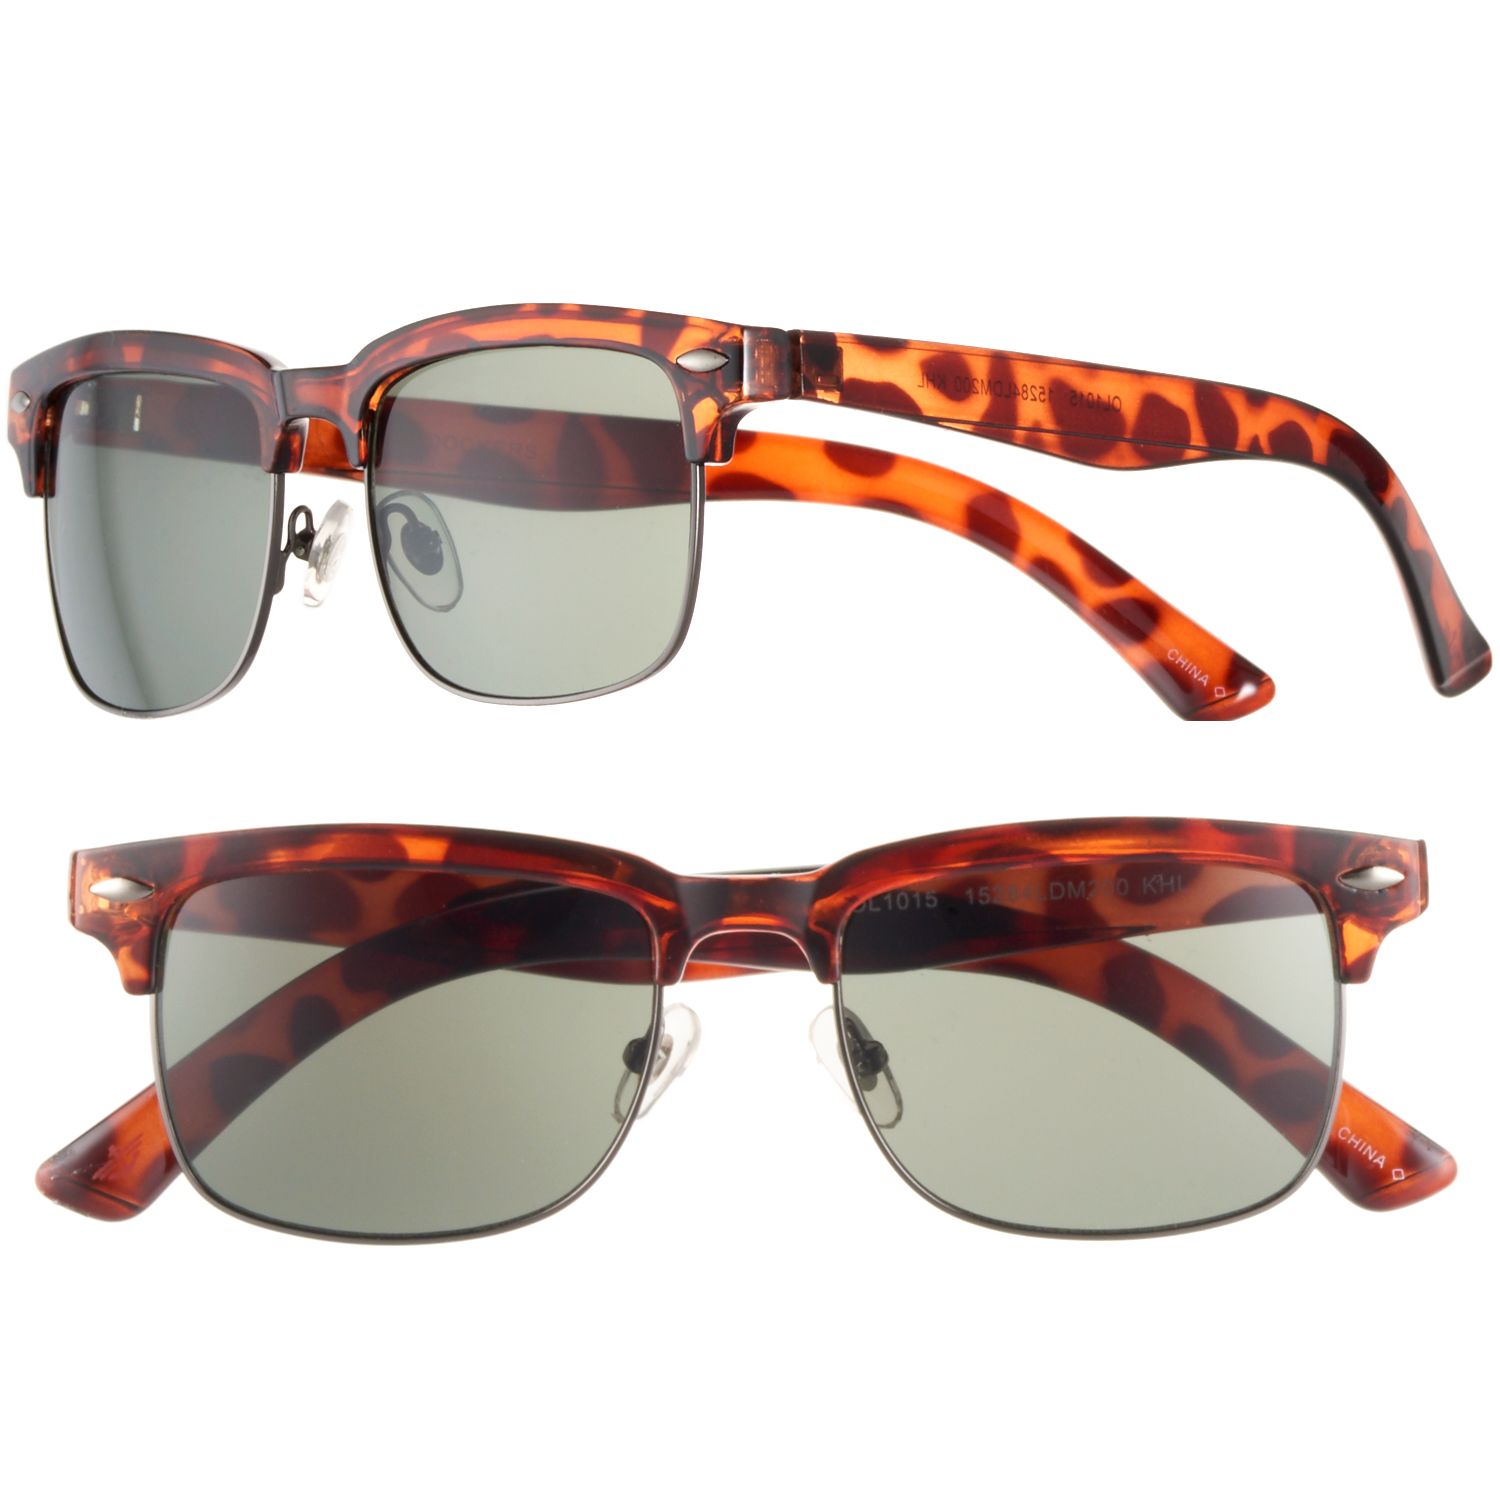 Men's Dockers Clubmaster Sunglasses